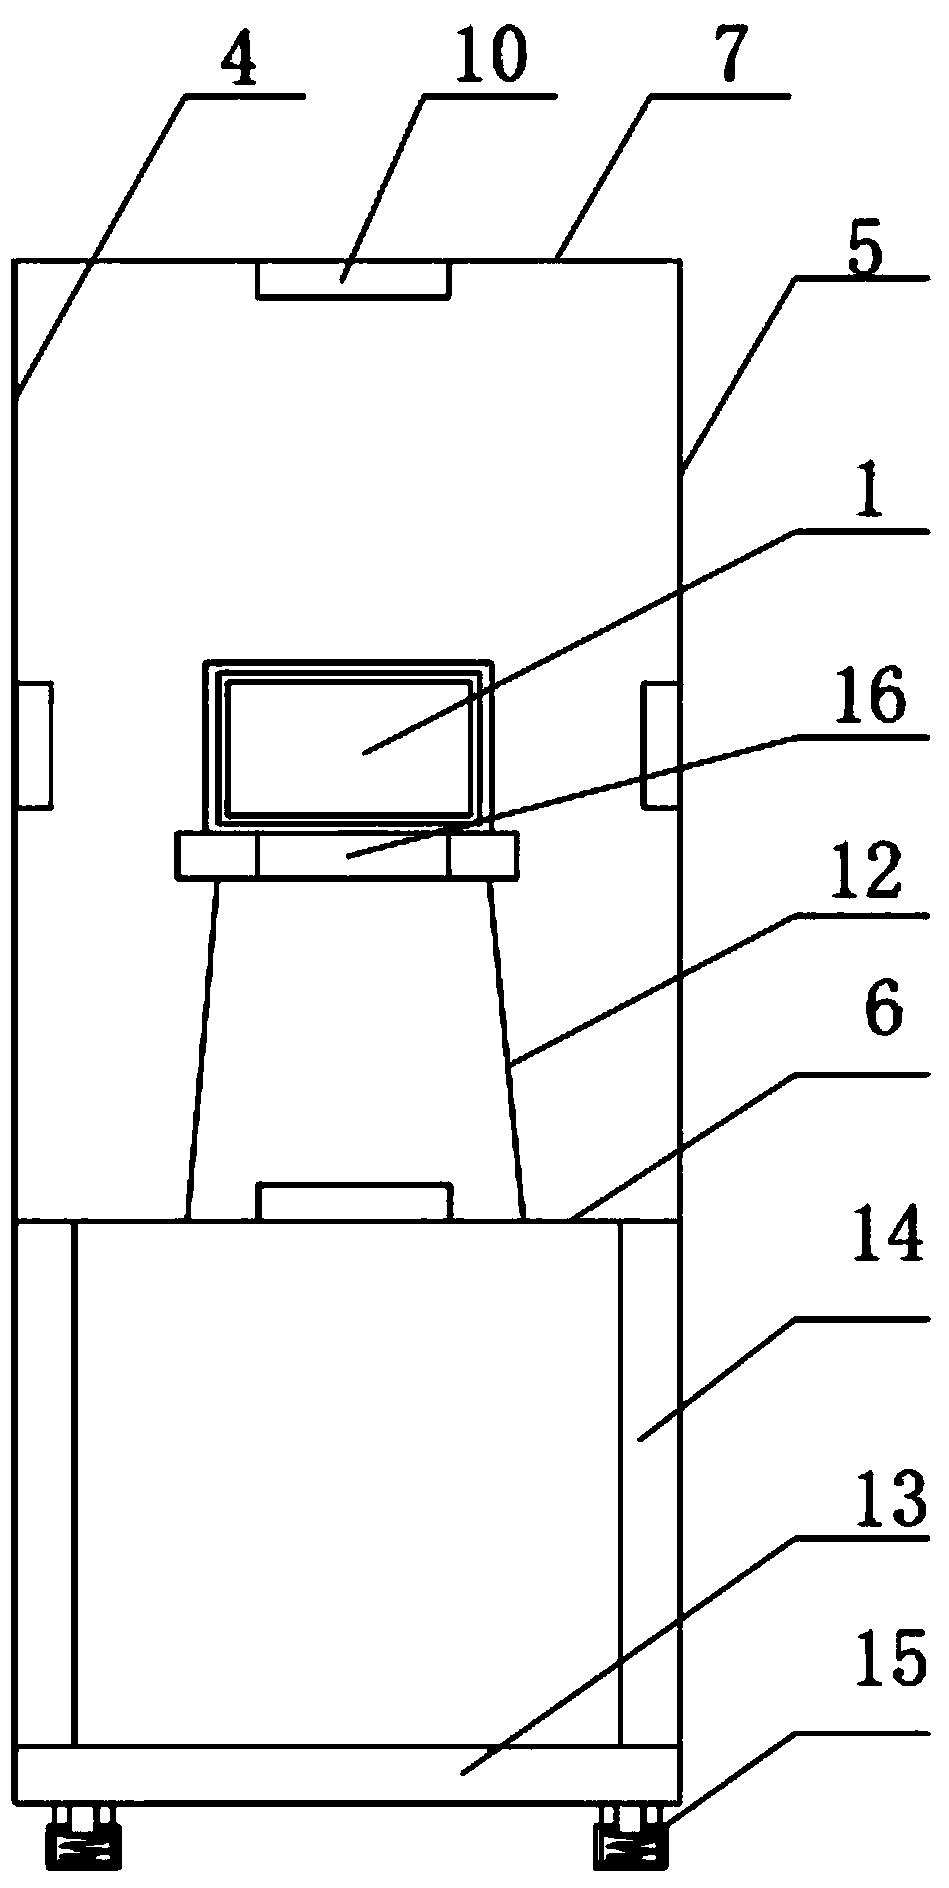 A vibration damping speaker system